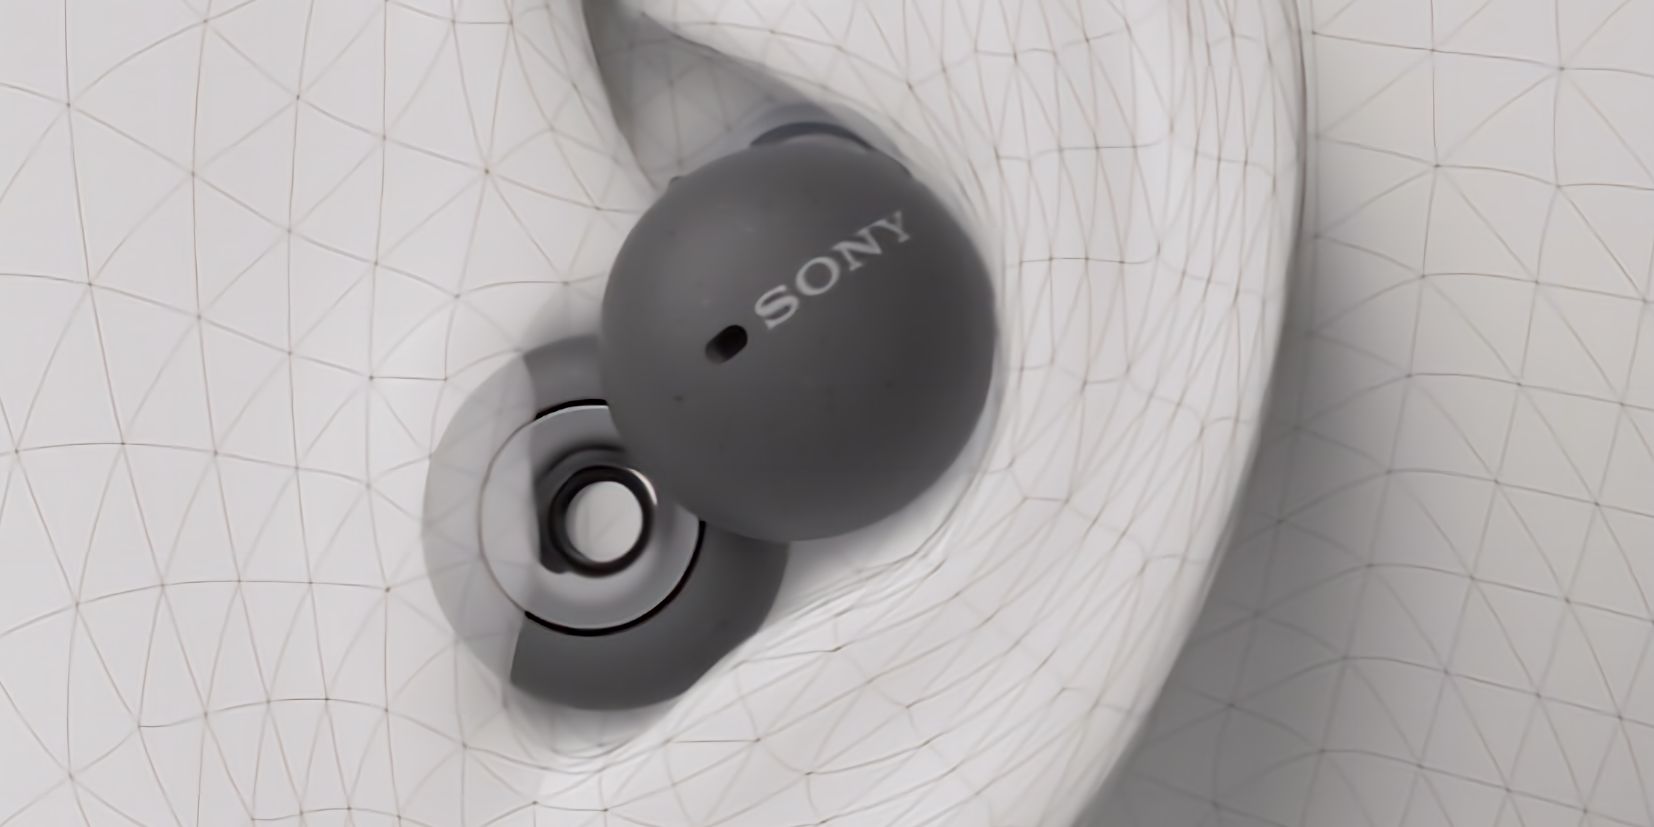 Sony LinkBuds in someone's ear